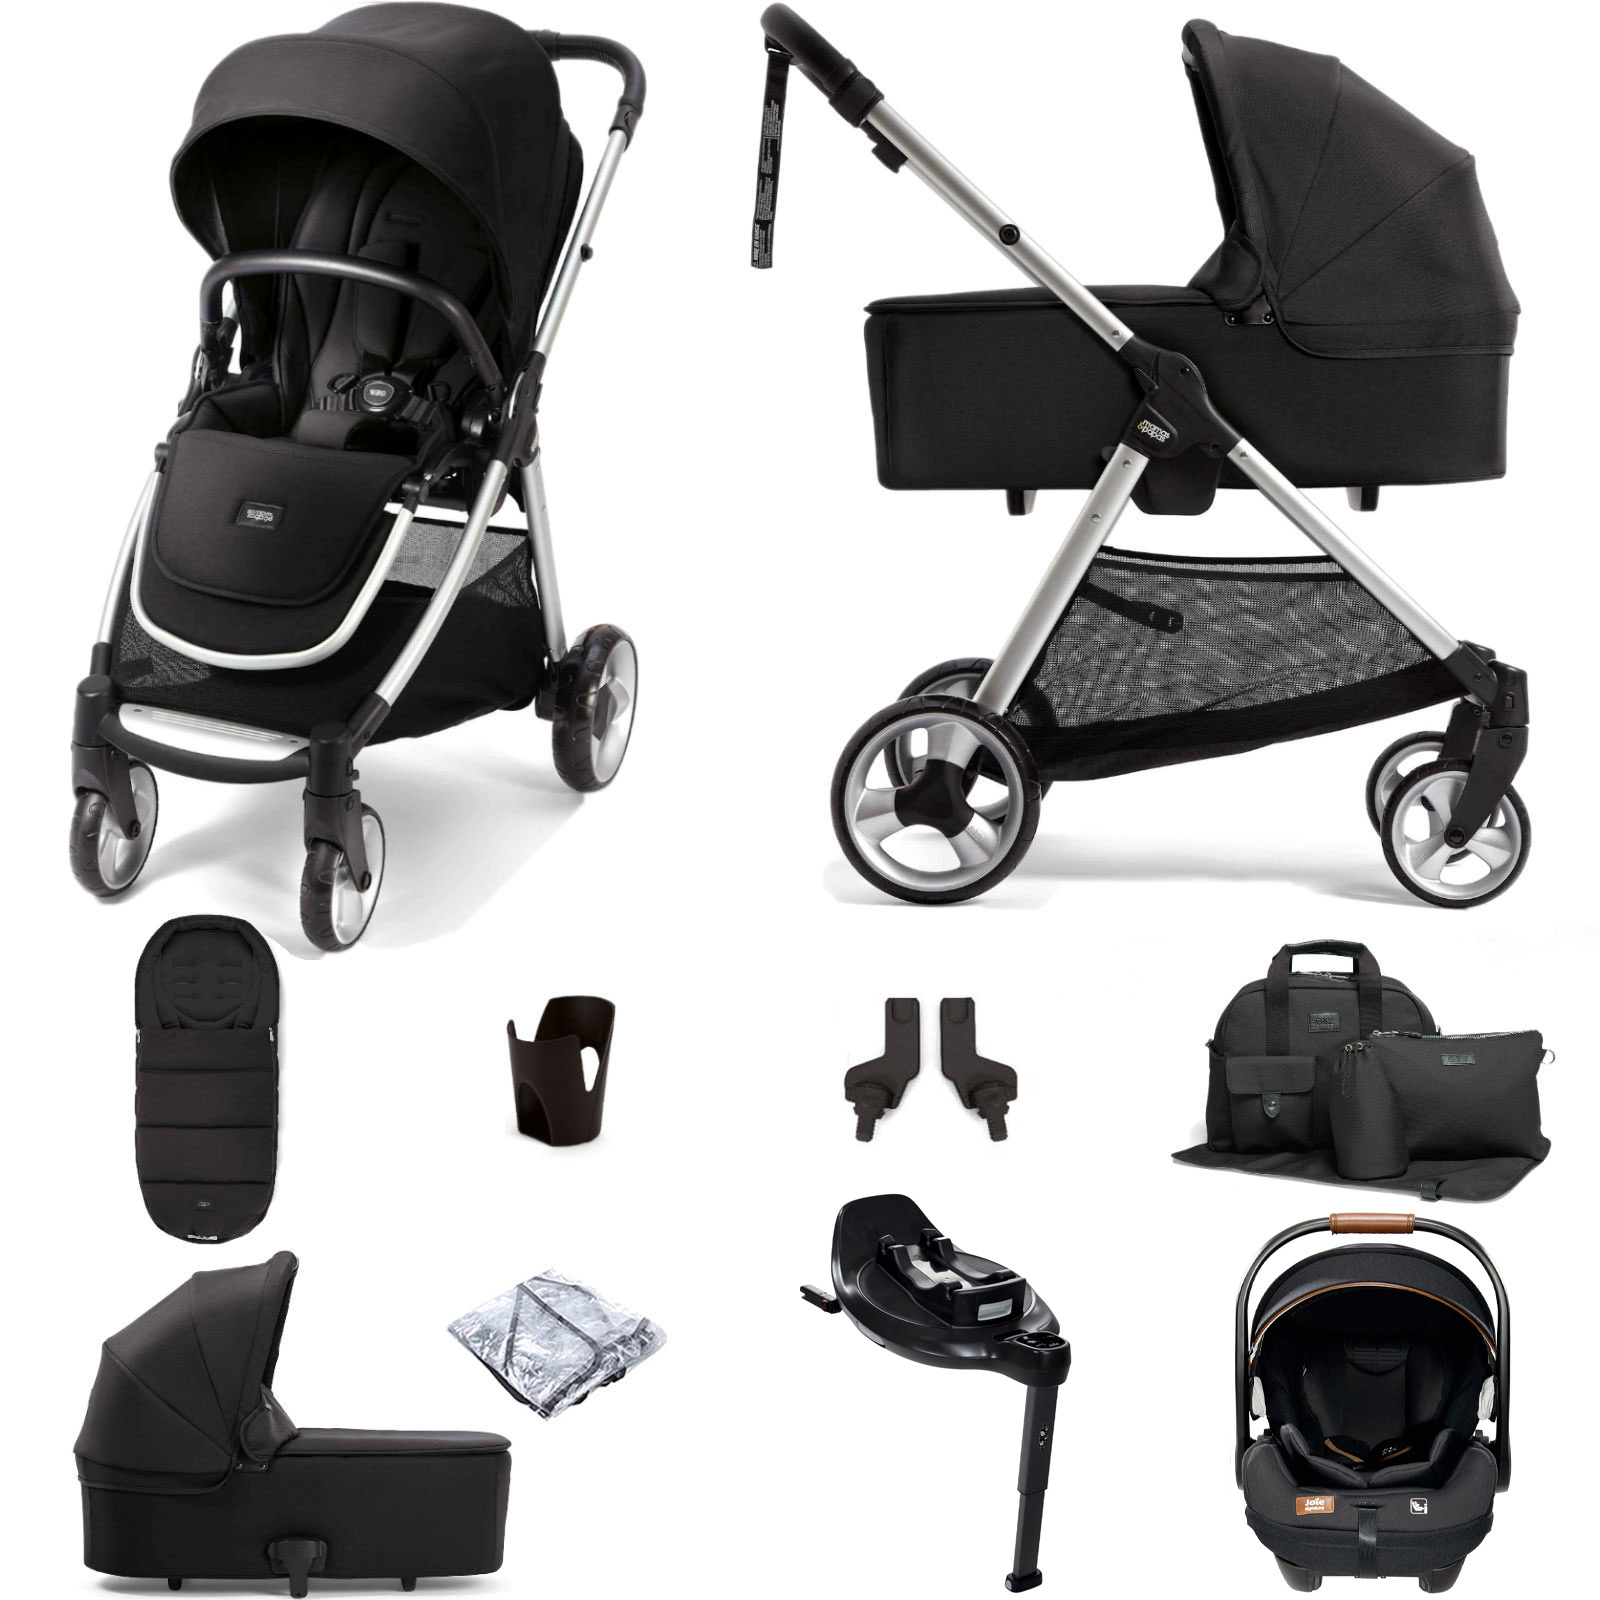 Mamas & Papas Flip XT2 Travel System with Carrycot, Accessories, i-Level Recline Car Seat & i-Base Encore - Black